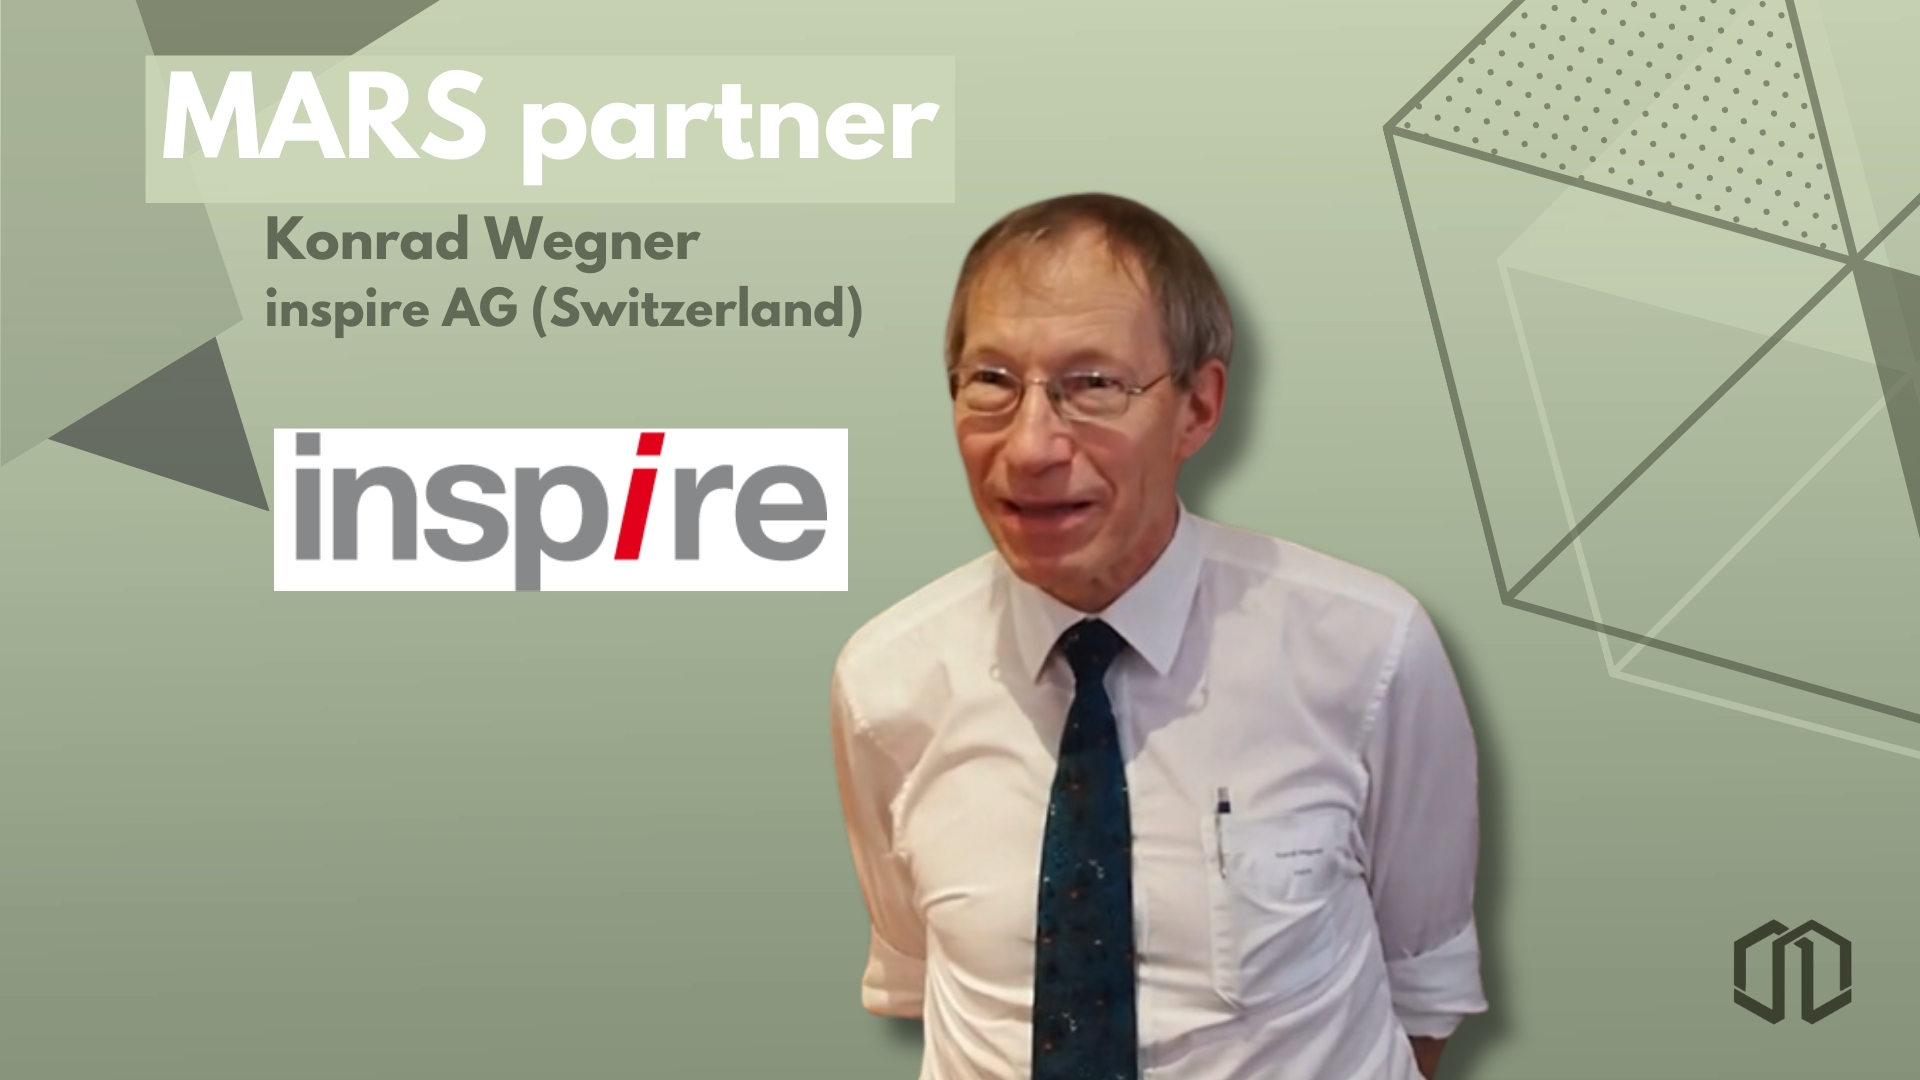 Meet our partner: Video interview with Konrad Wegner (inspire AG) 